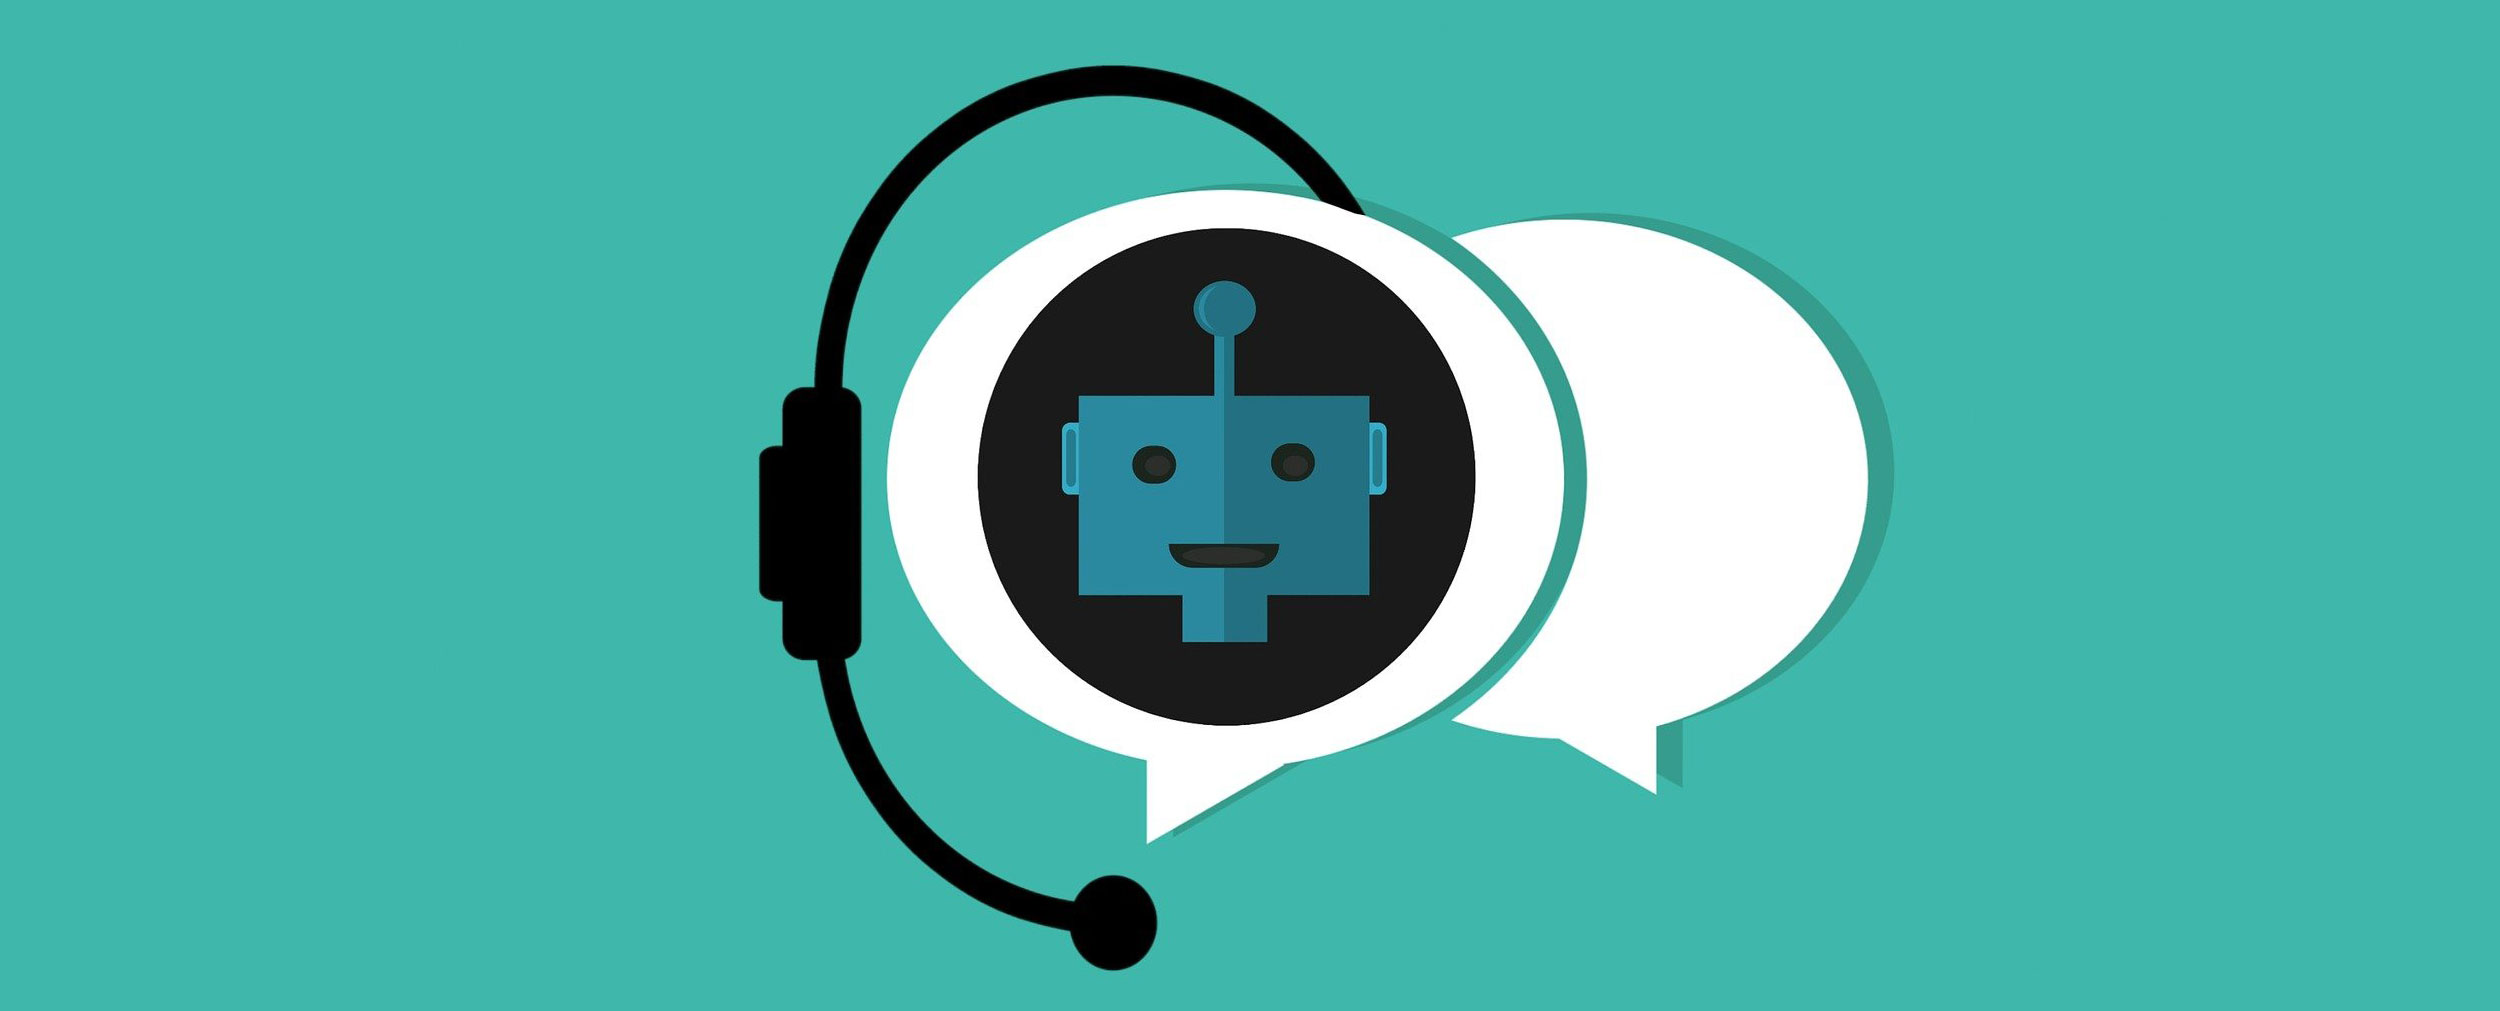 Chatbots als digitale assistenten in r sap